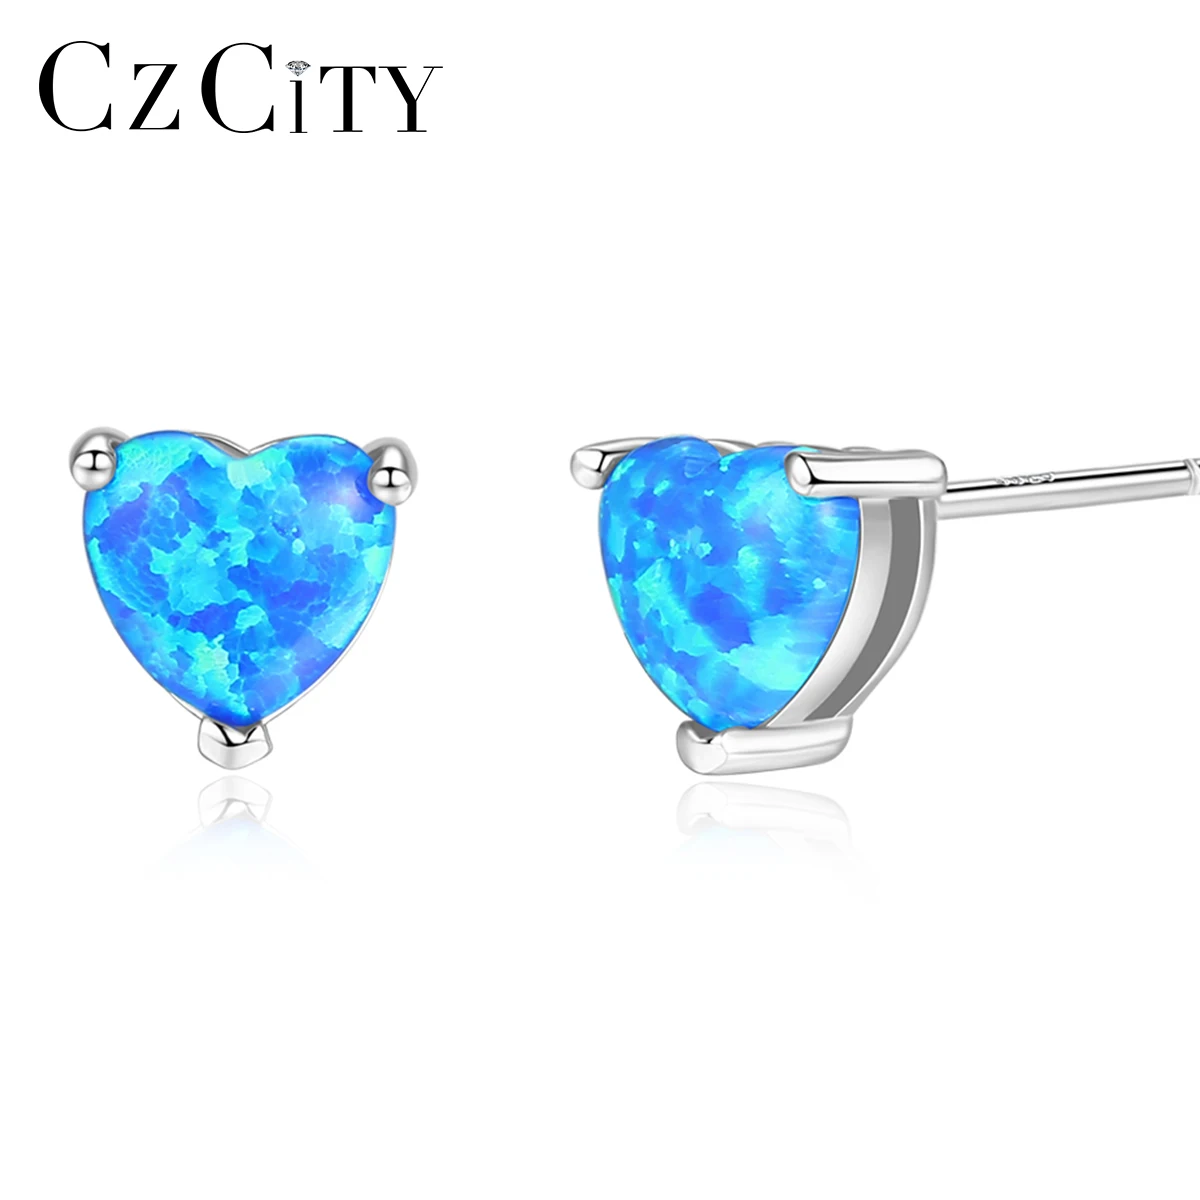 

CZCITY Authentic 925 Sterling Silver 6mm Love Heart Fire Opal Stud Earrings for Women Colorful Charming Wedding Earrings Jewelry